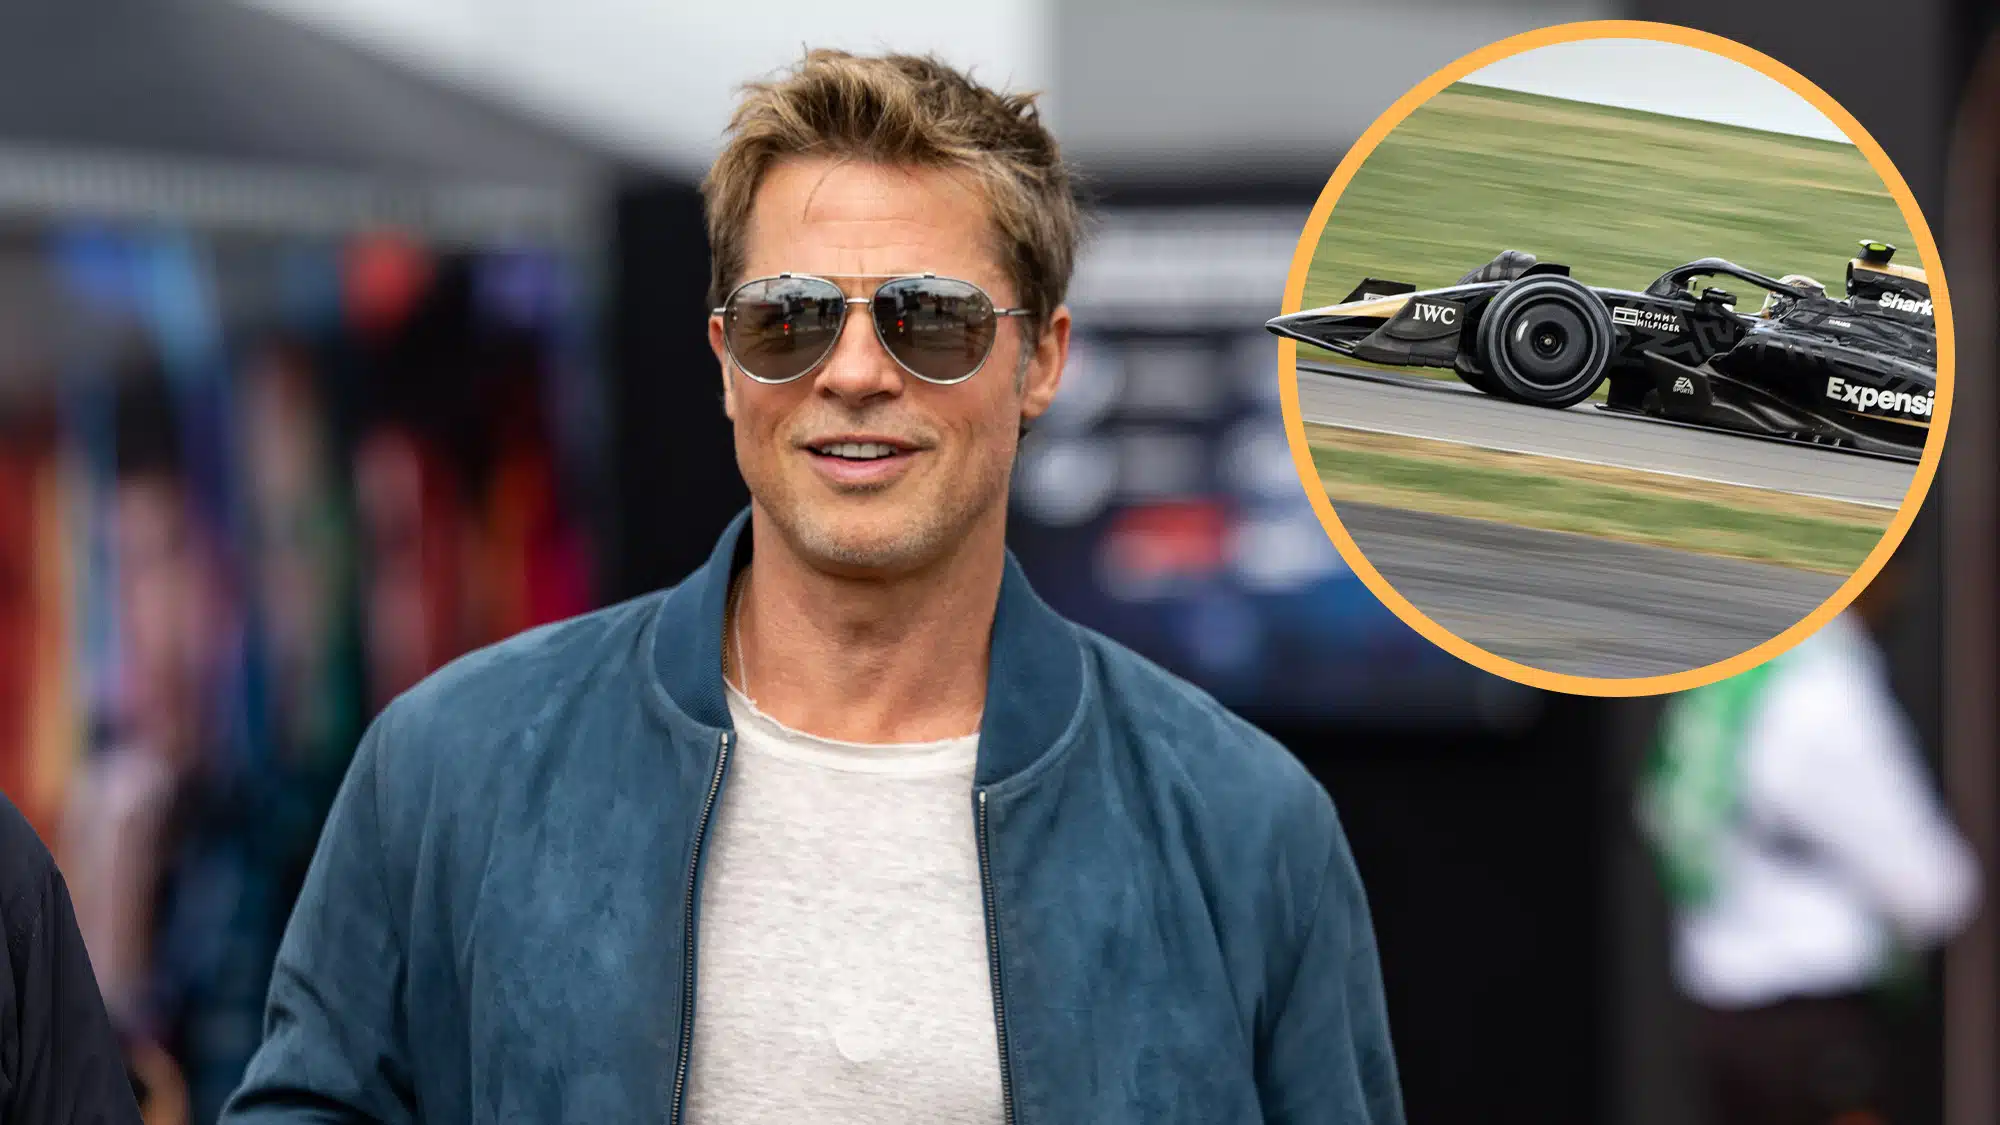 Brad Pitt filming F1 movie at the British GP: latest on